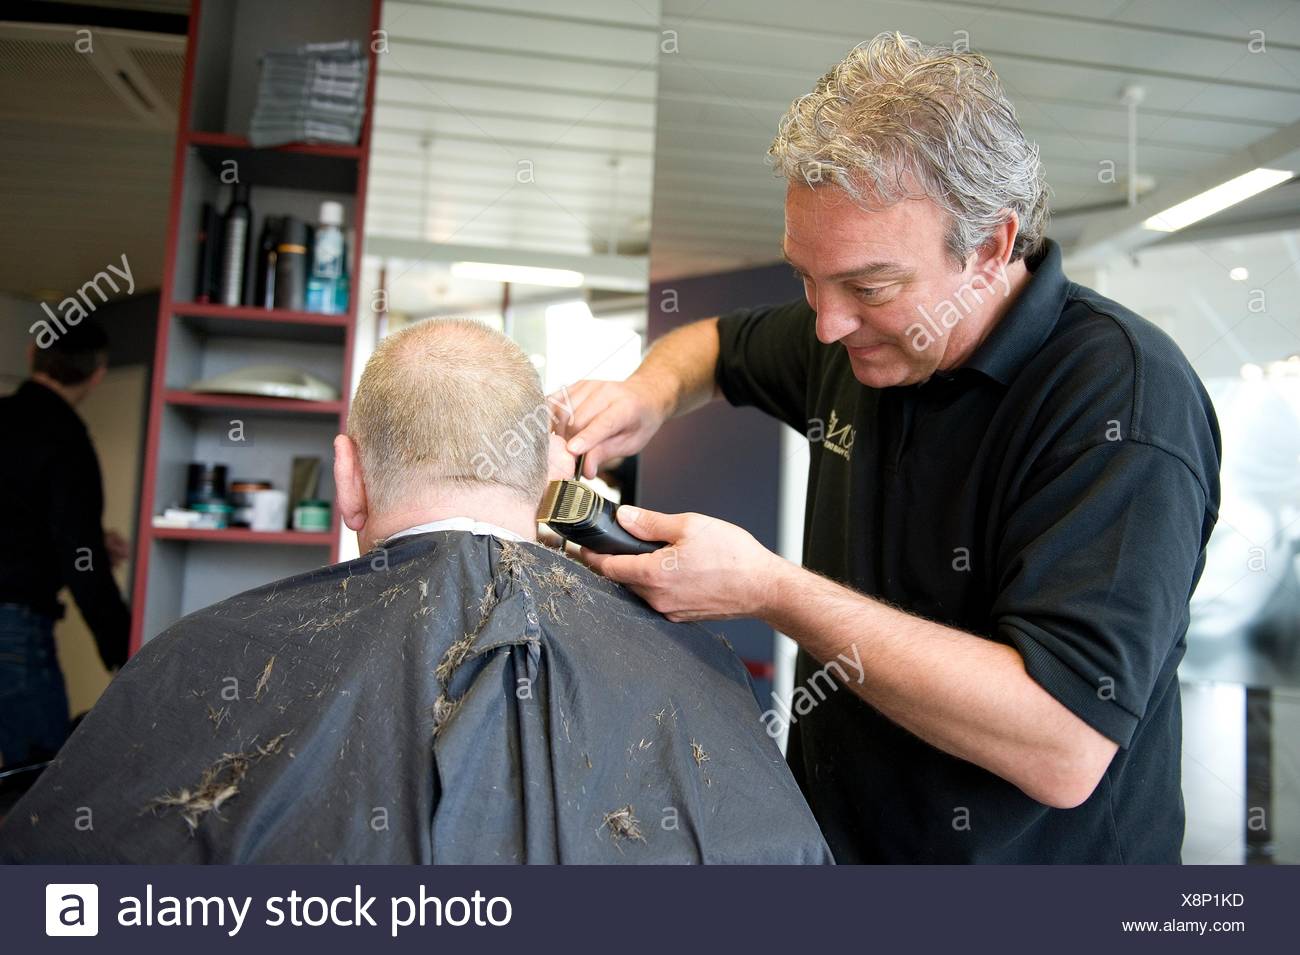 A Barber Giving A Male Customer A Haircut Stock Photo